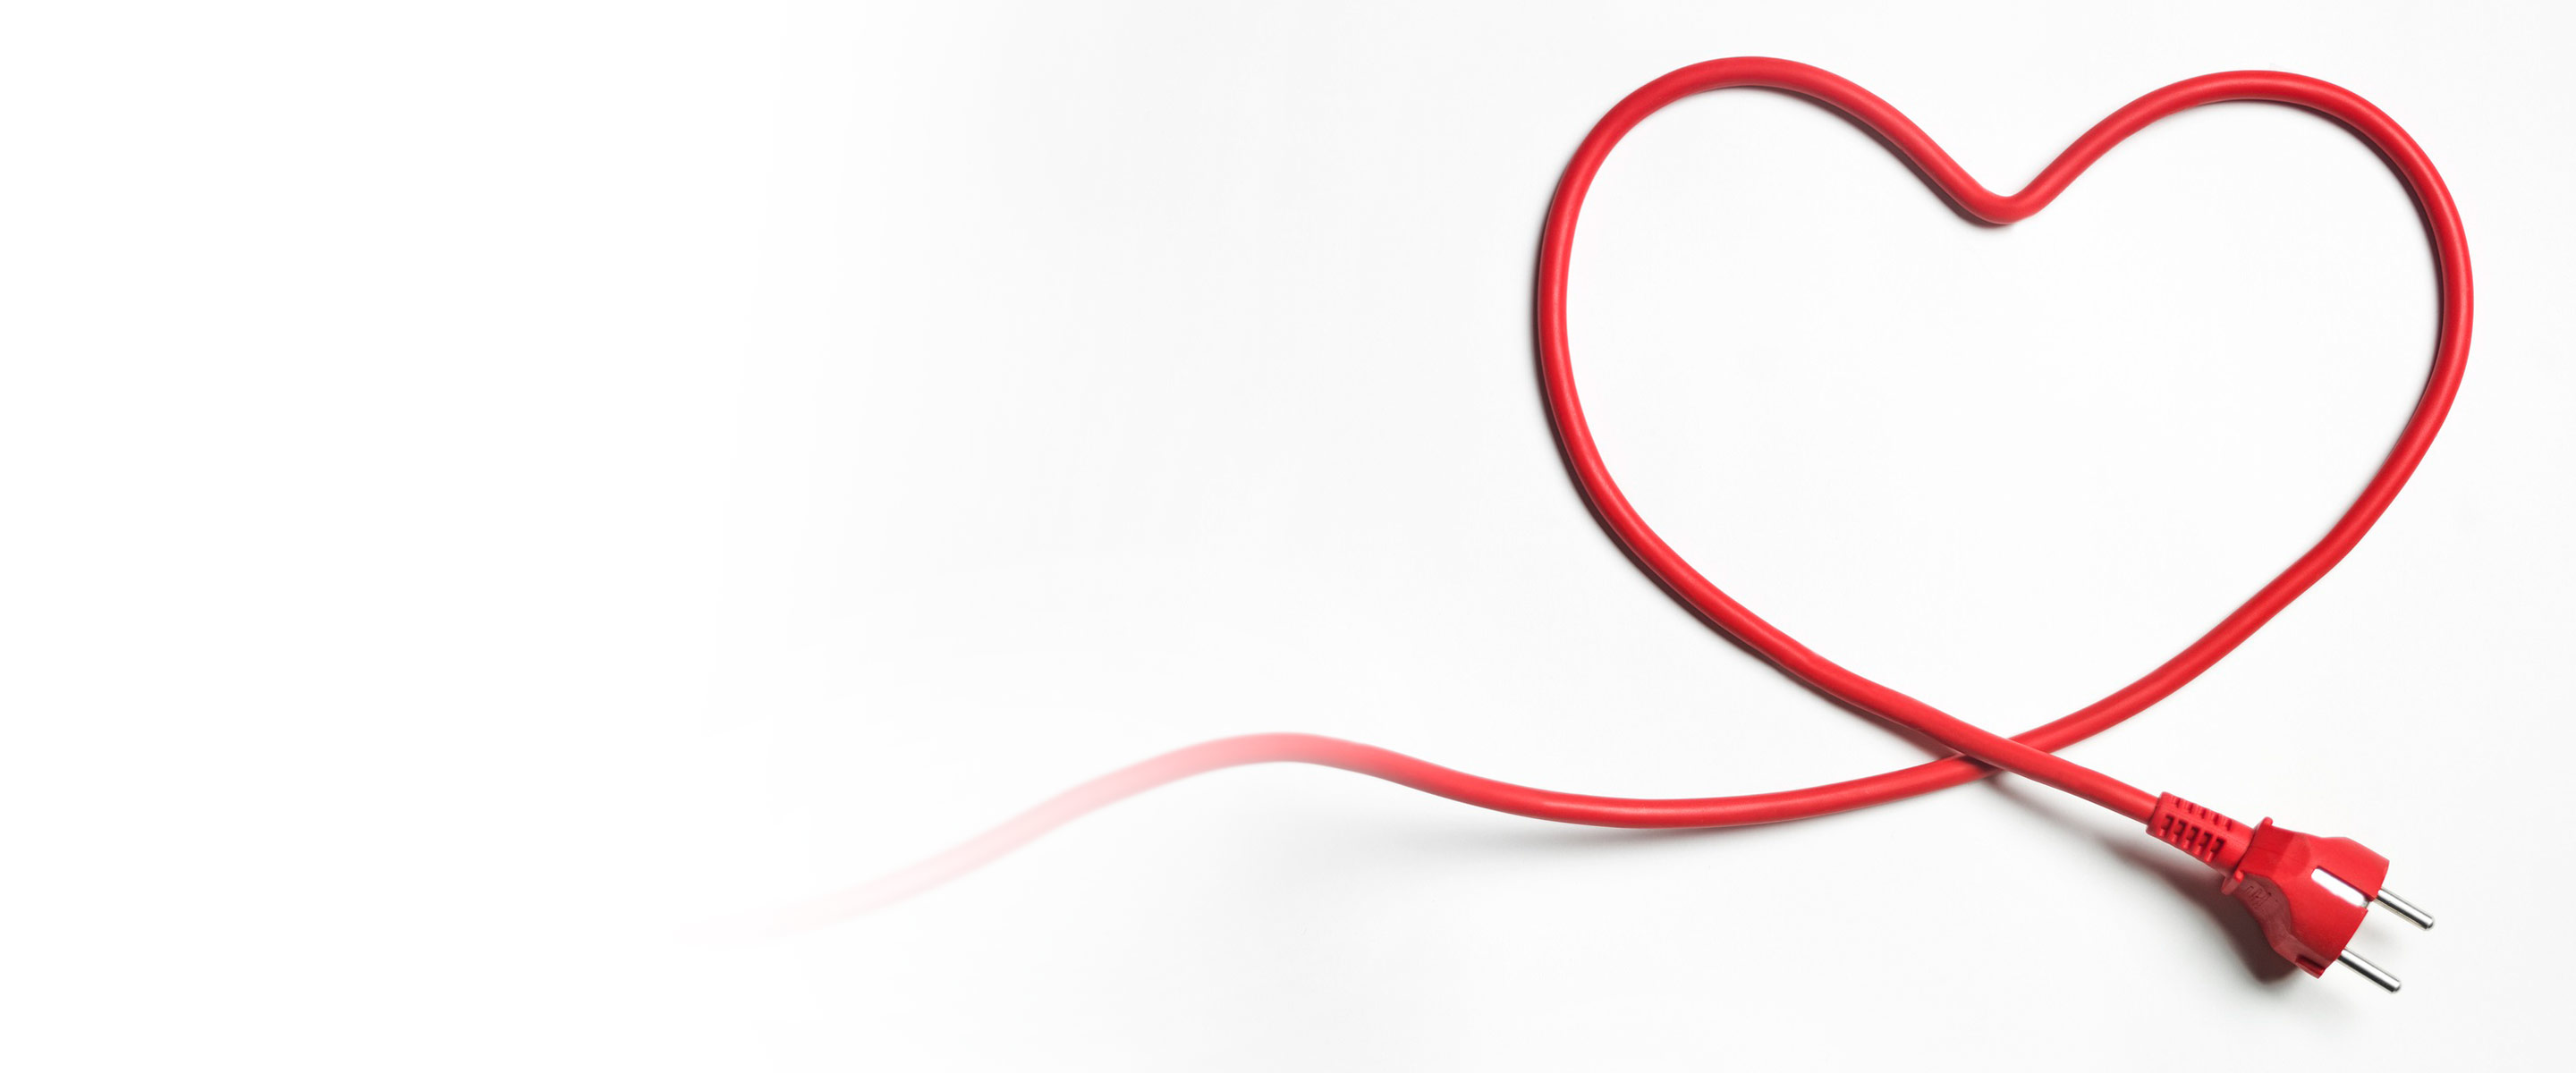 heart shaped power cord